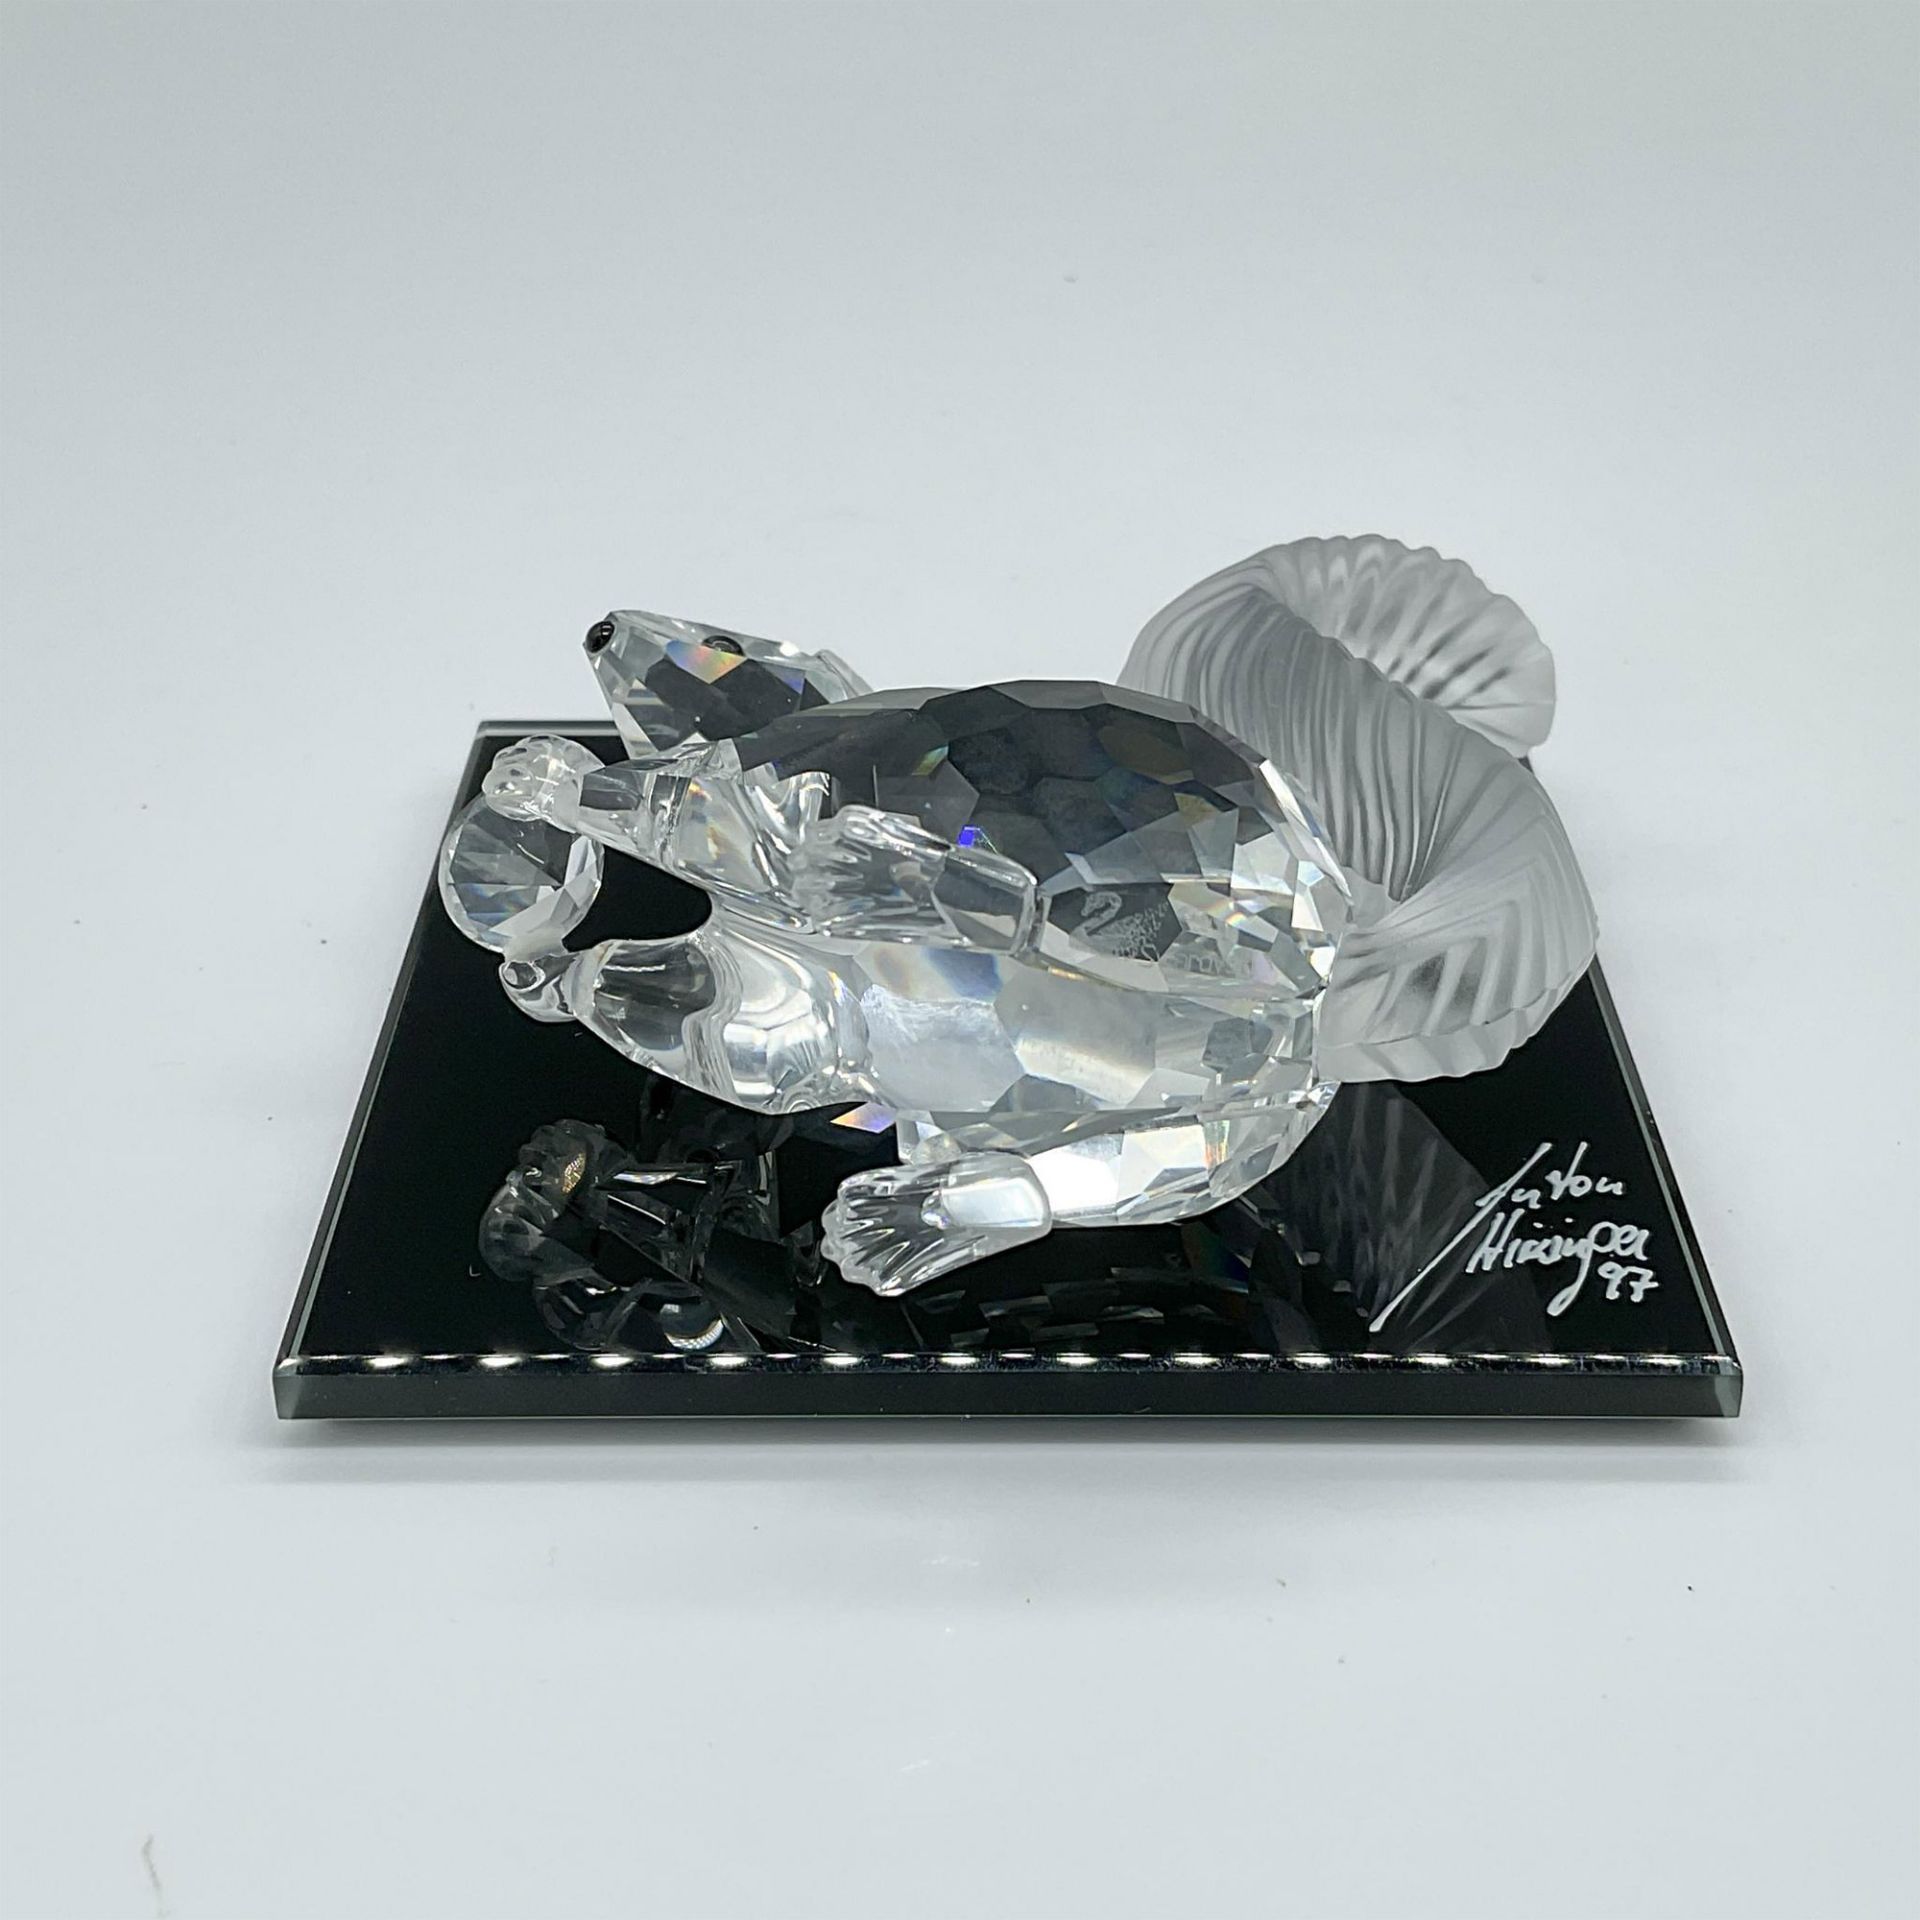 Swarovski SCS Crystal Figurine, Squirrel with Base - Image 3 of 4